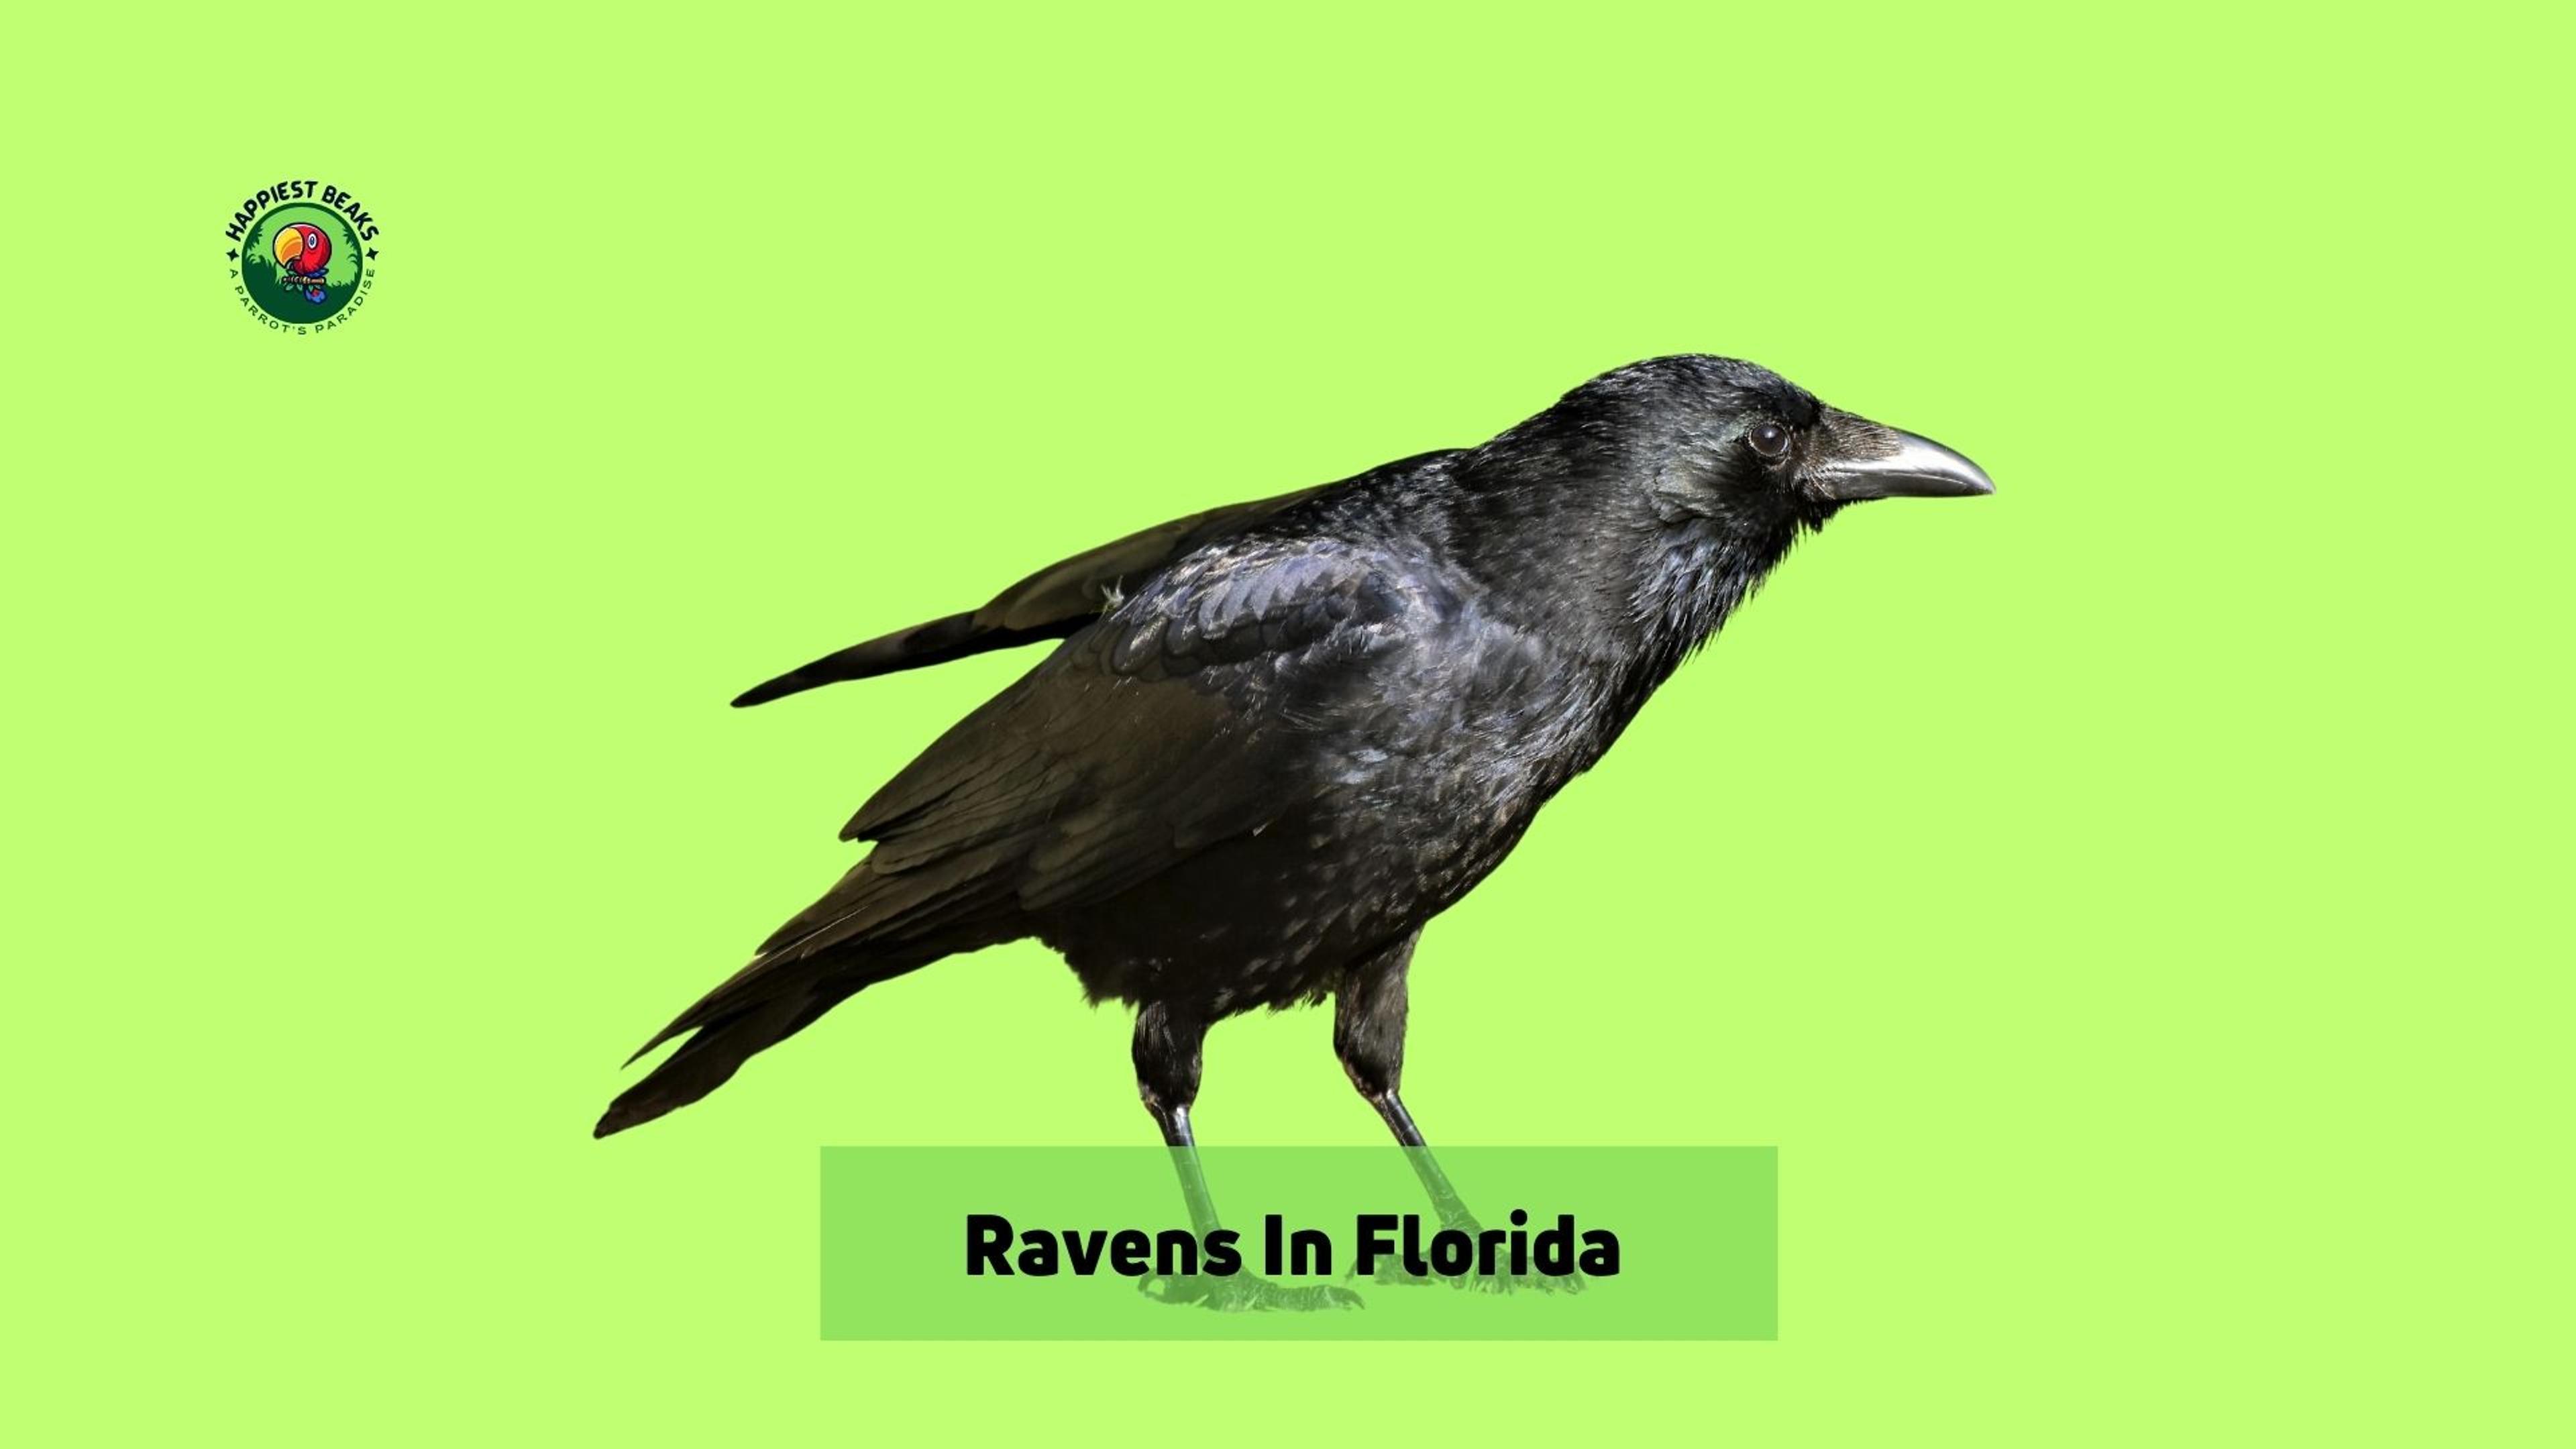 Ravens in Florida